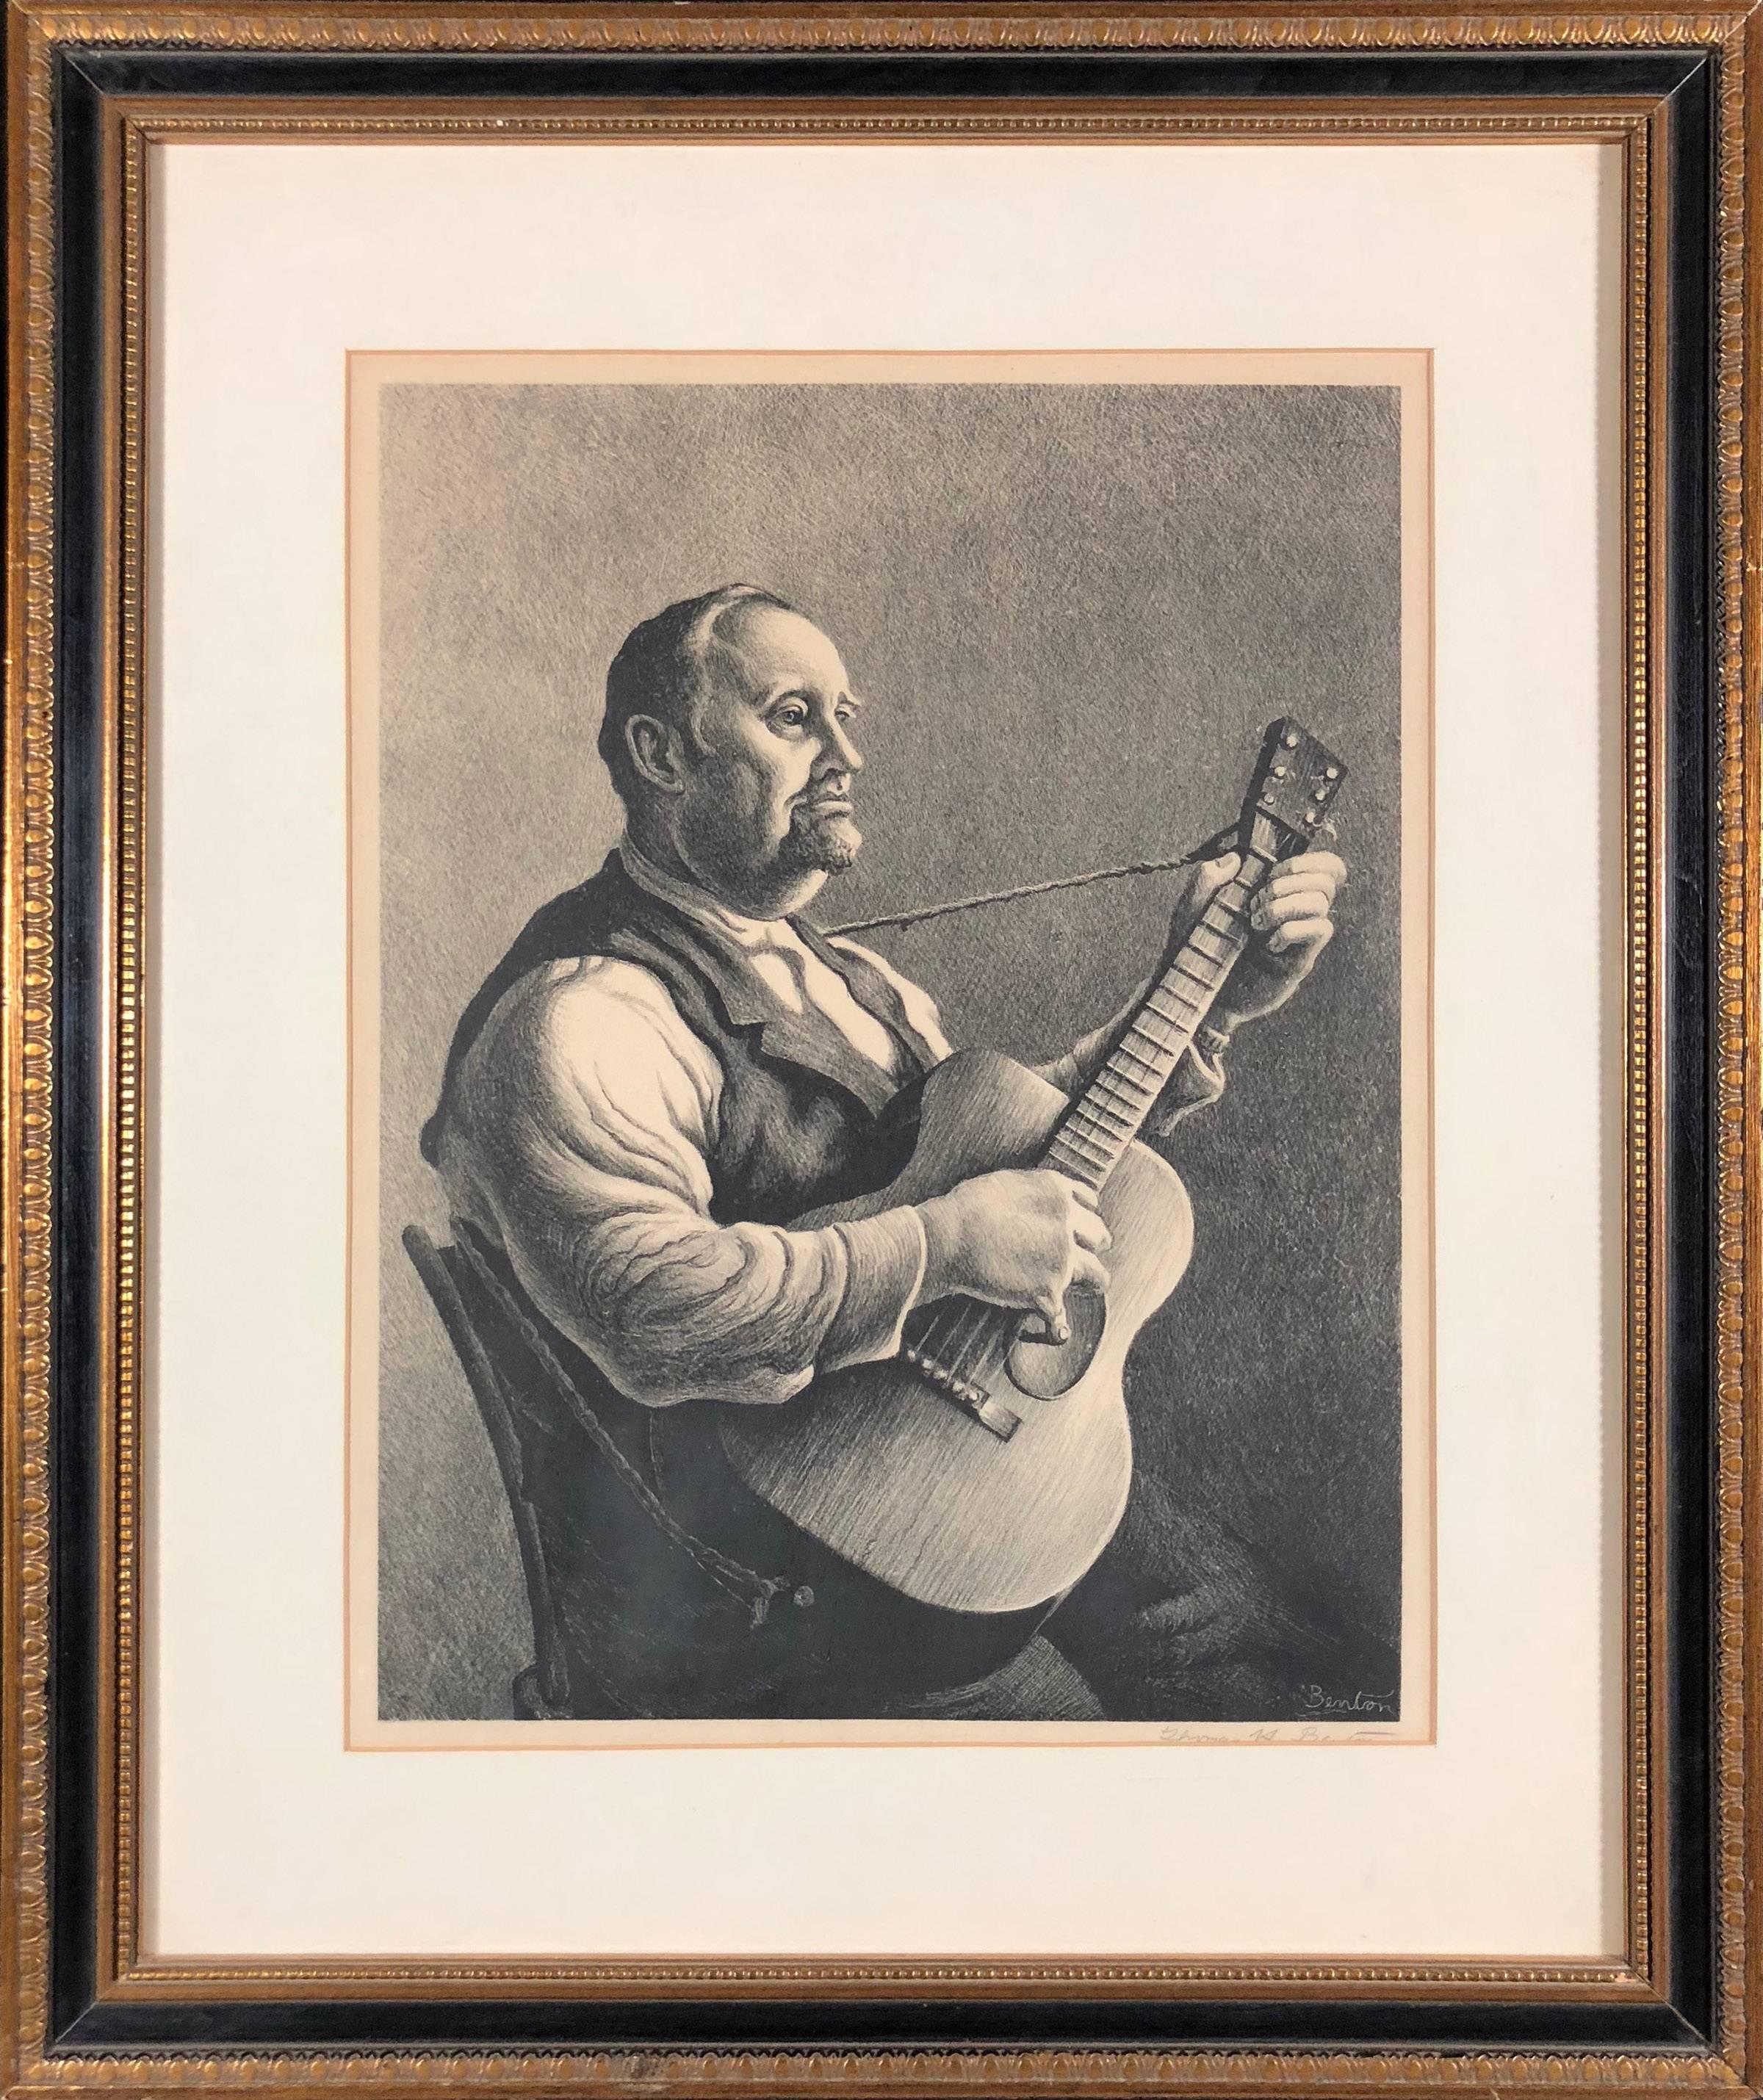 The Hymn Singer - Print by Thomas Hart Benton